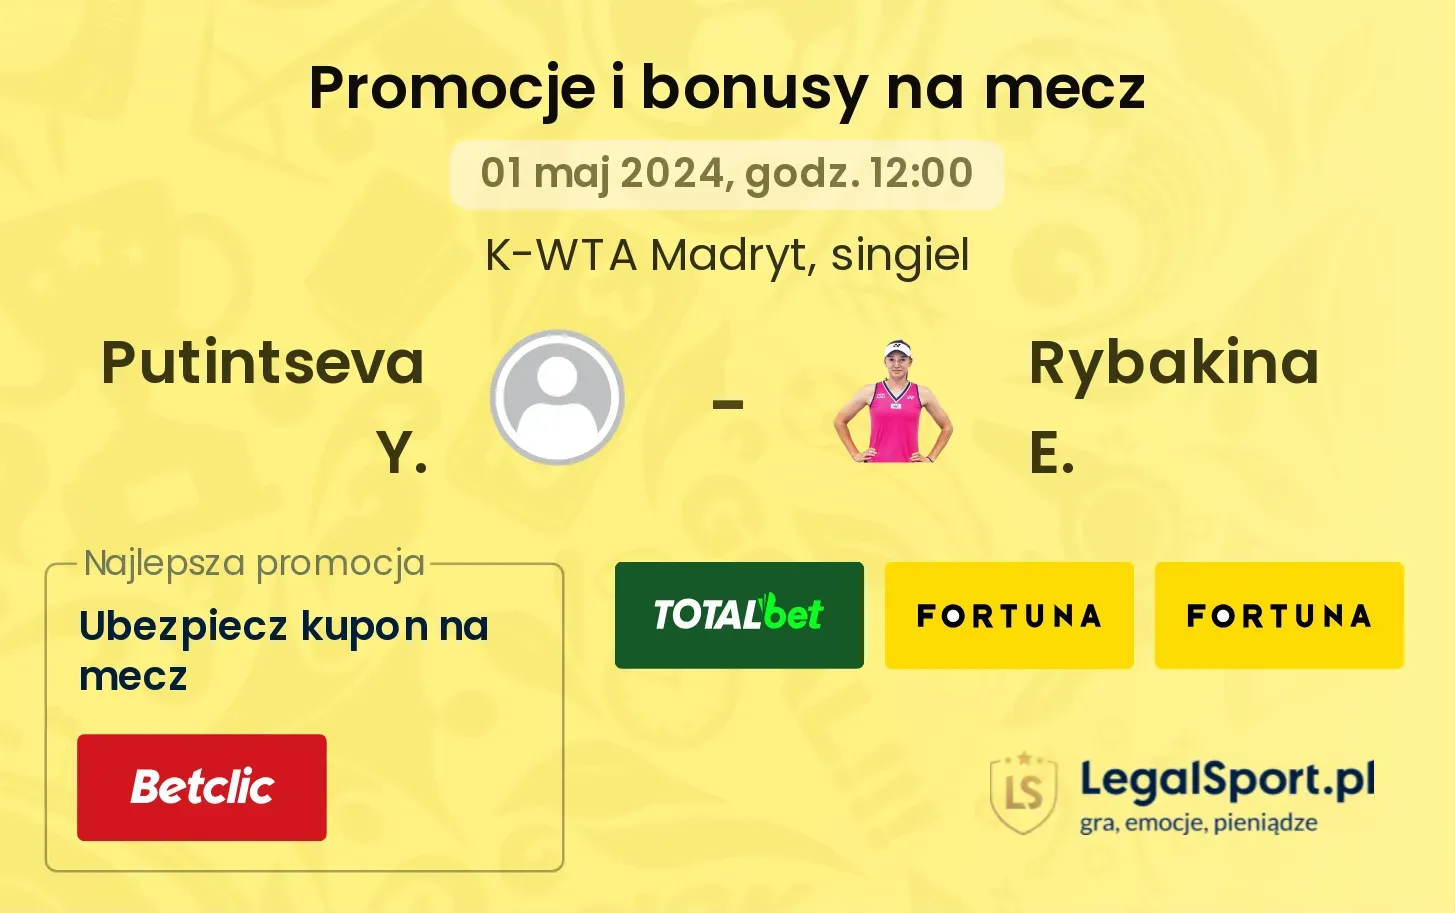 Putintseva Y. - Rybakina E. promocje bonusy na mecz